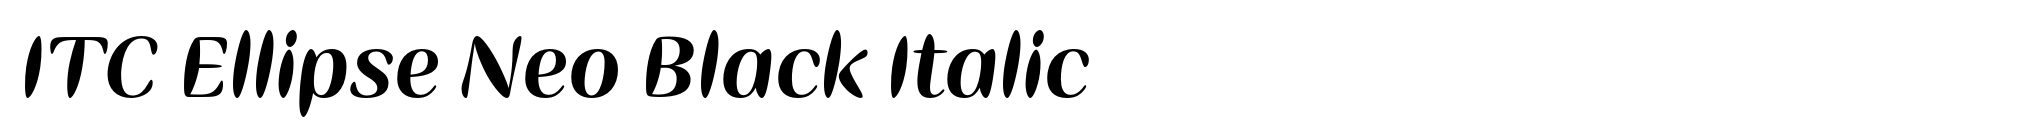 ITC Ellipse Neo Black Italic image